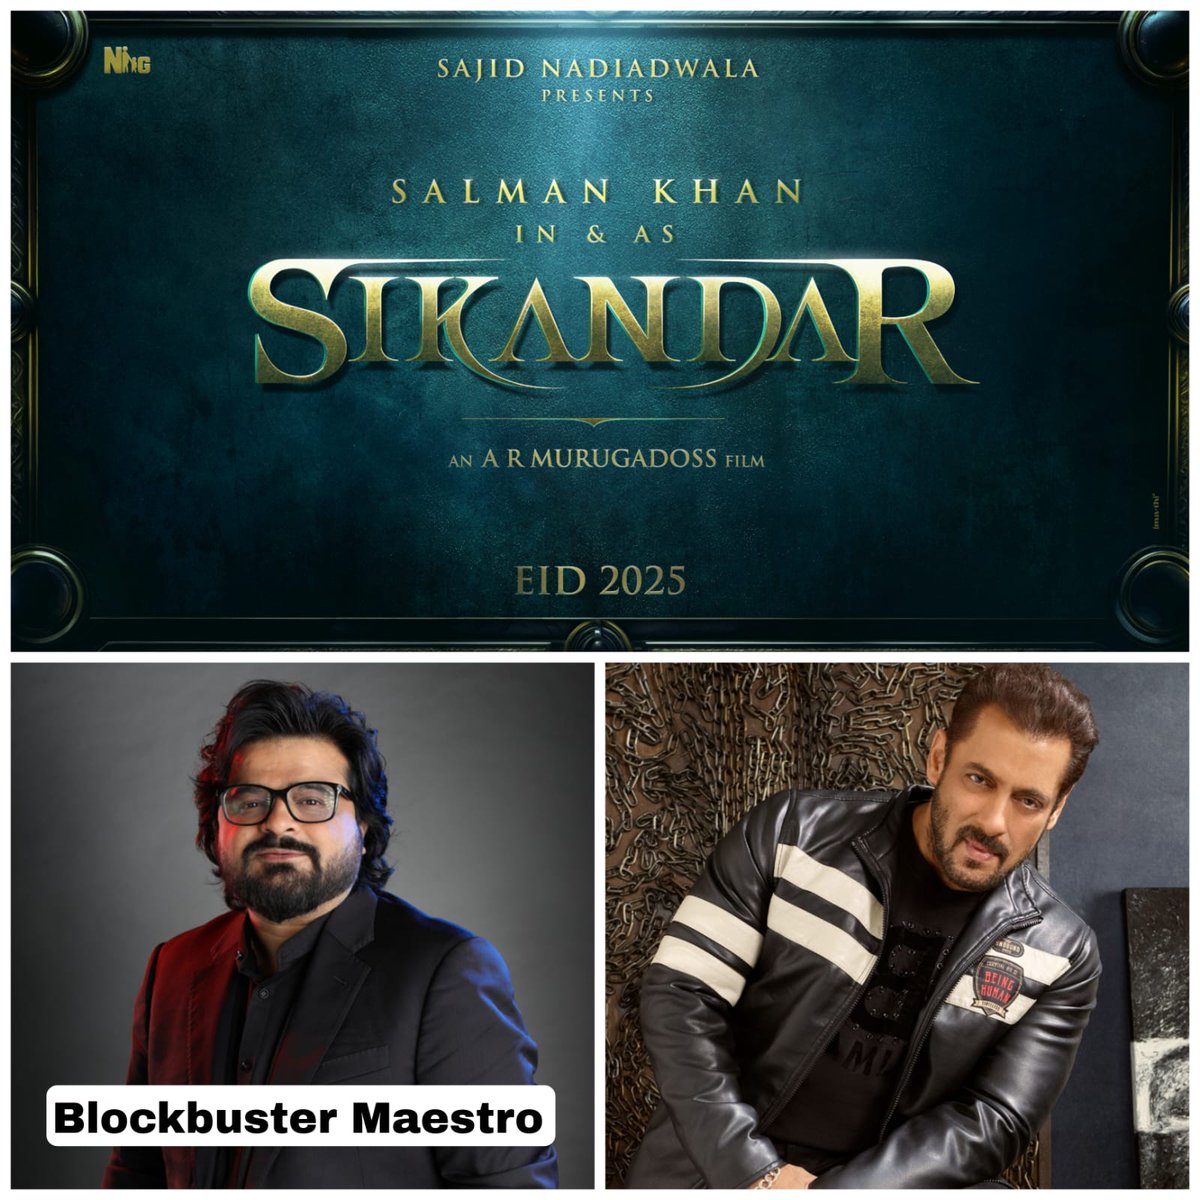 Joining the blockbuster trio of @BeingSalmanKhan, #SajidNadiadwala, and @ARMurugados, #PritamChakraborty comes on board as a music director of #SIKANDAR!
SIKANDAR releasing in cinemas near you on EID 2025!
@NGEMovies @WardaNadiadwala #SikandarEid2025